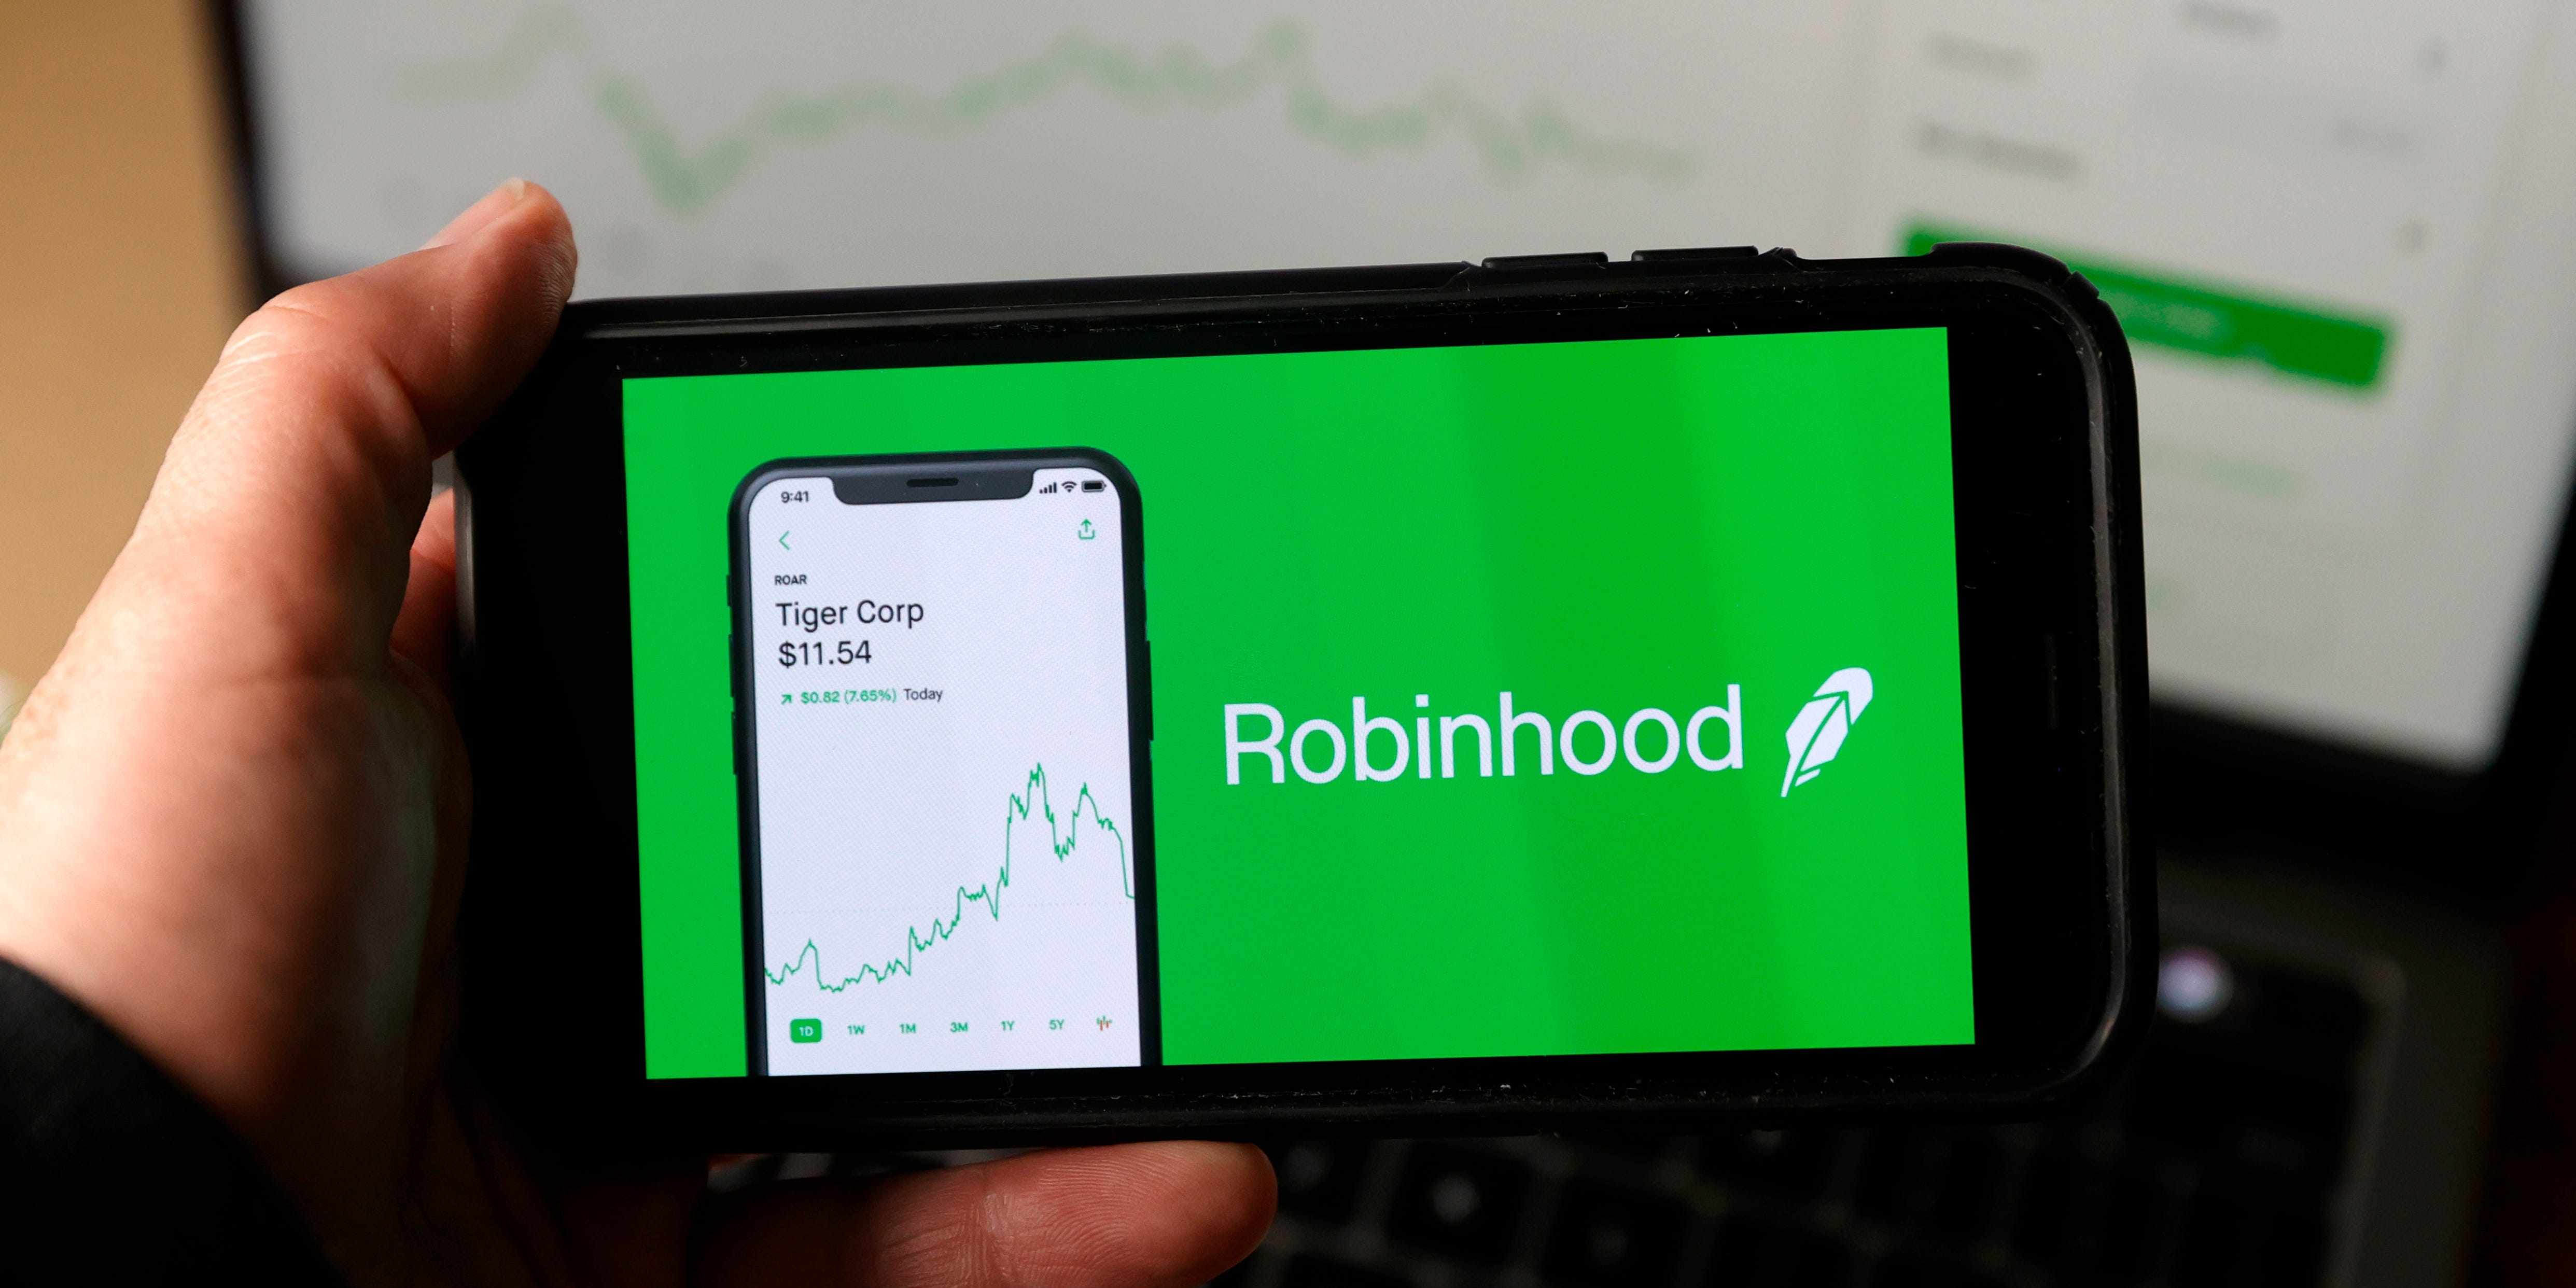 trading robinhood gamestop stock system